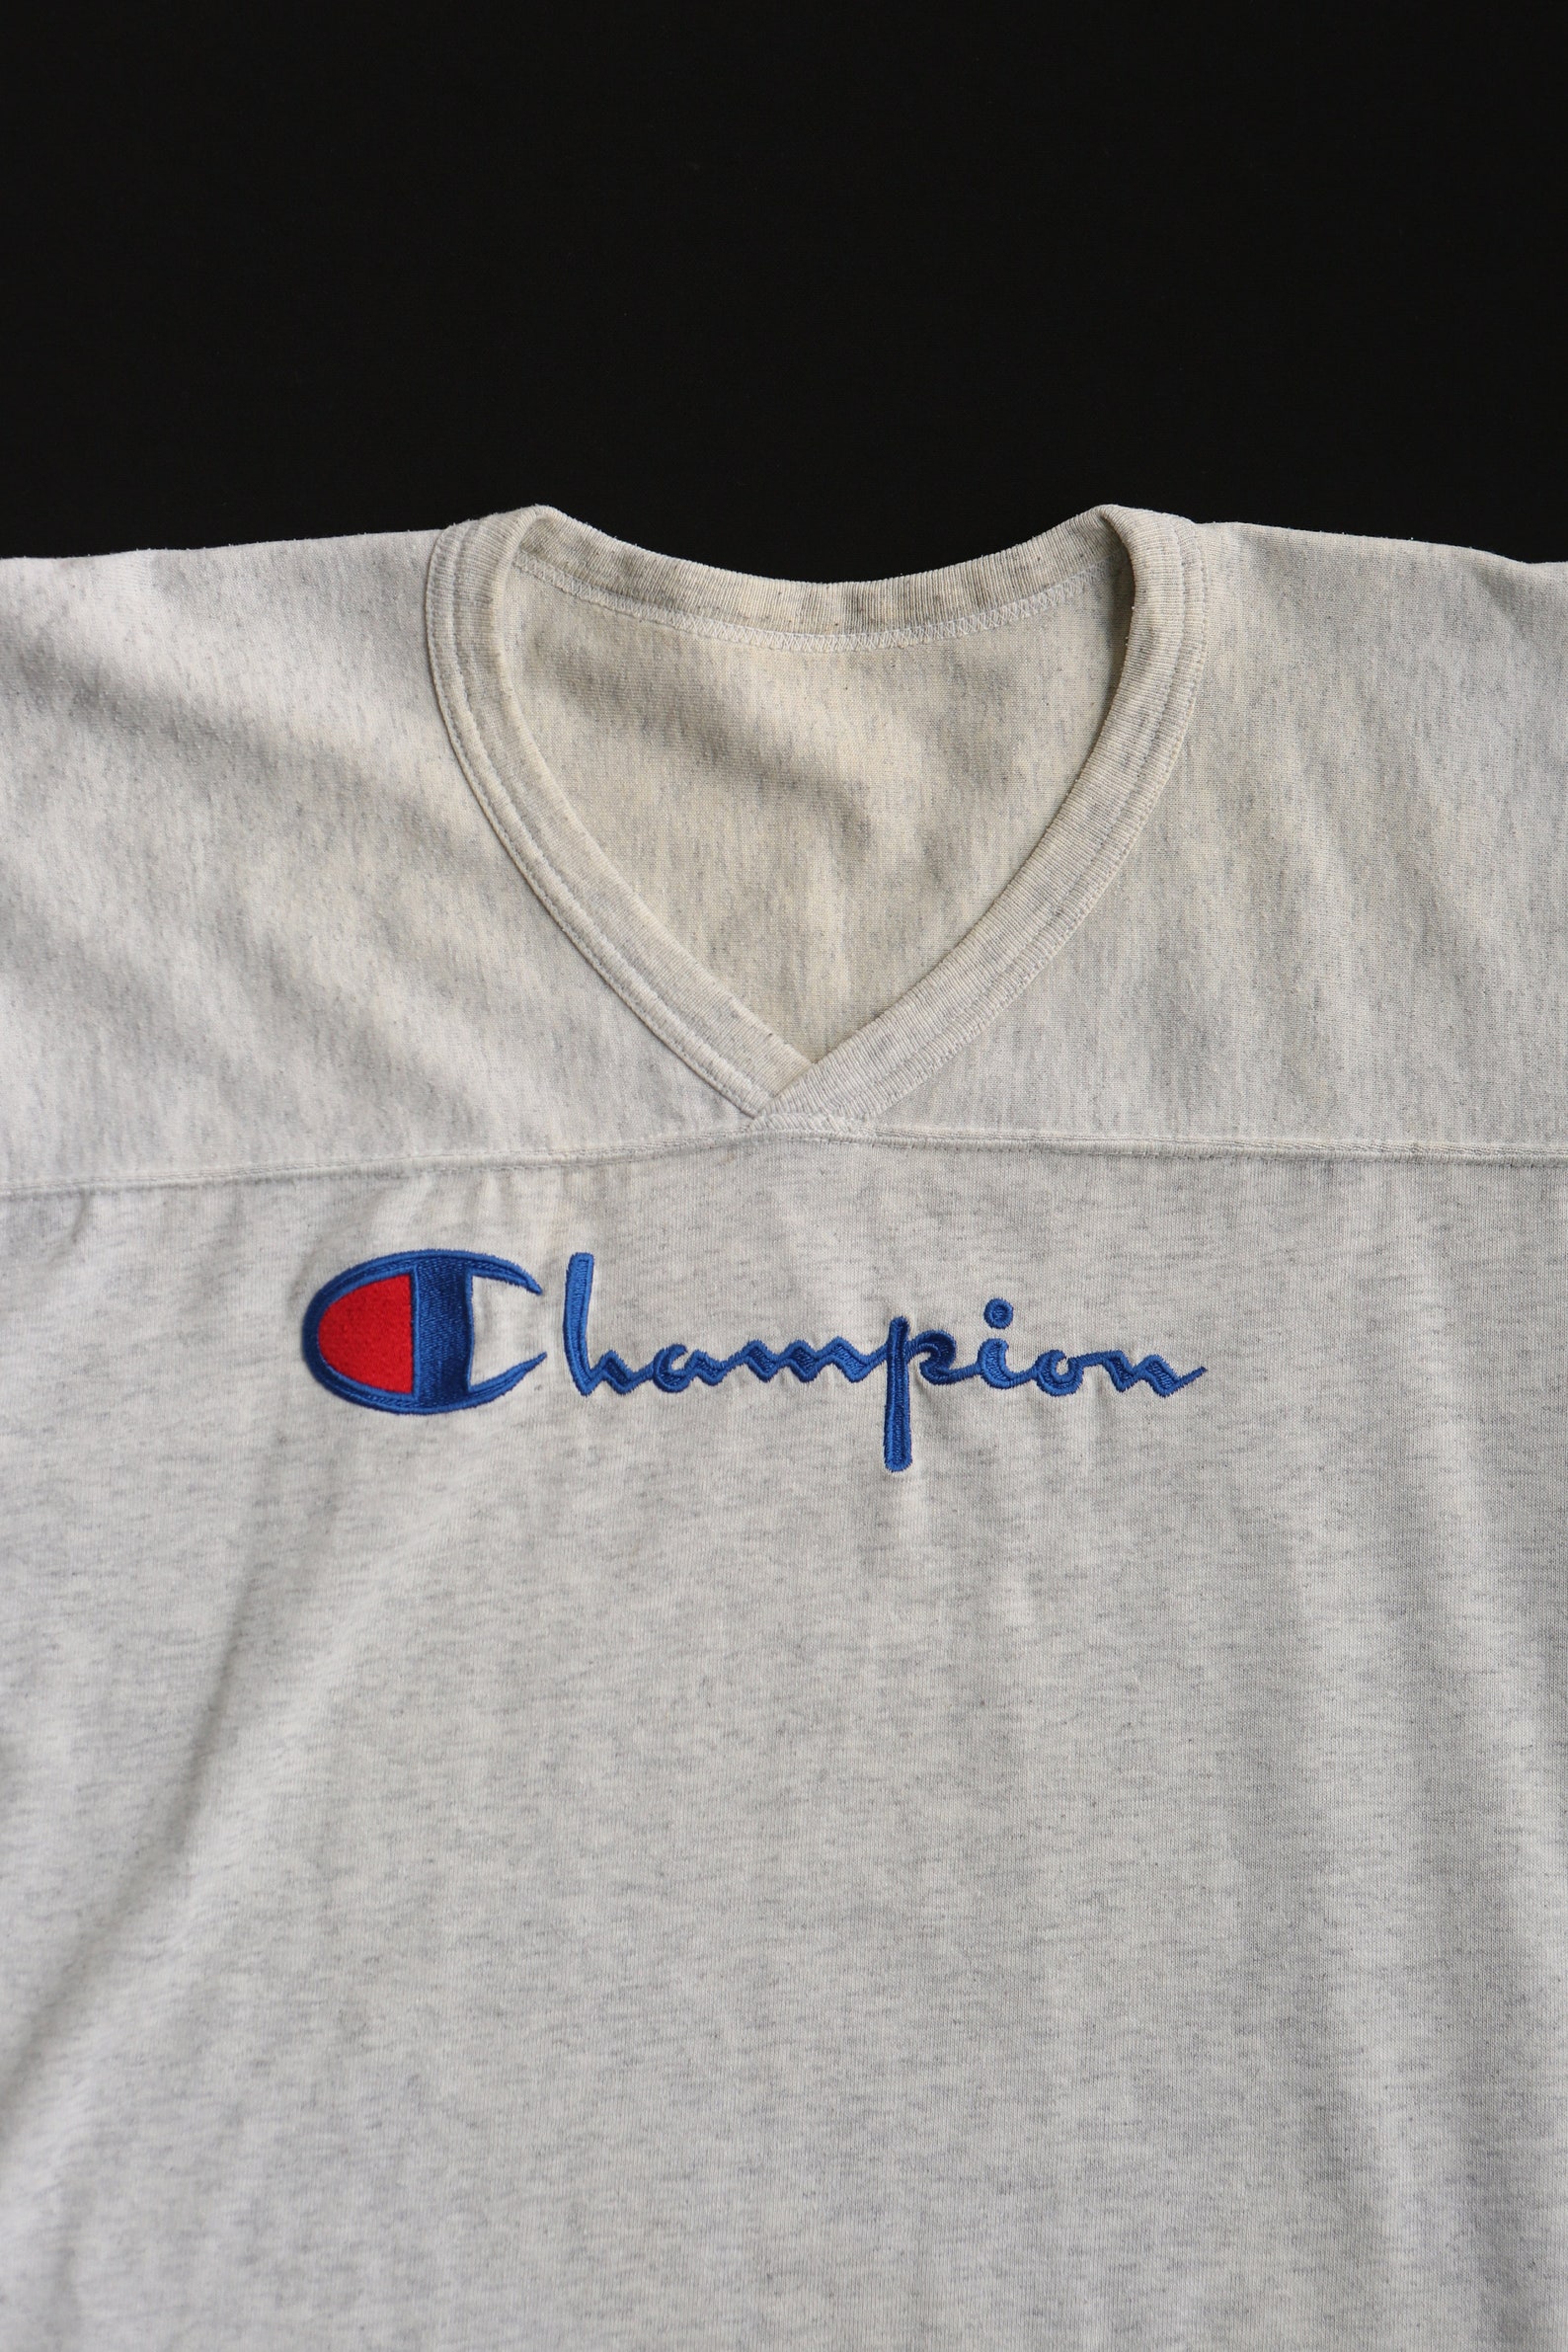 Vintage Champion T-shirt | Etsy